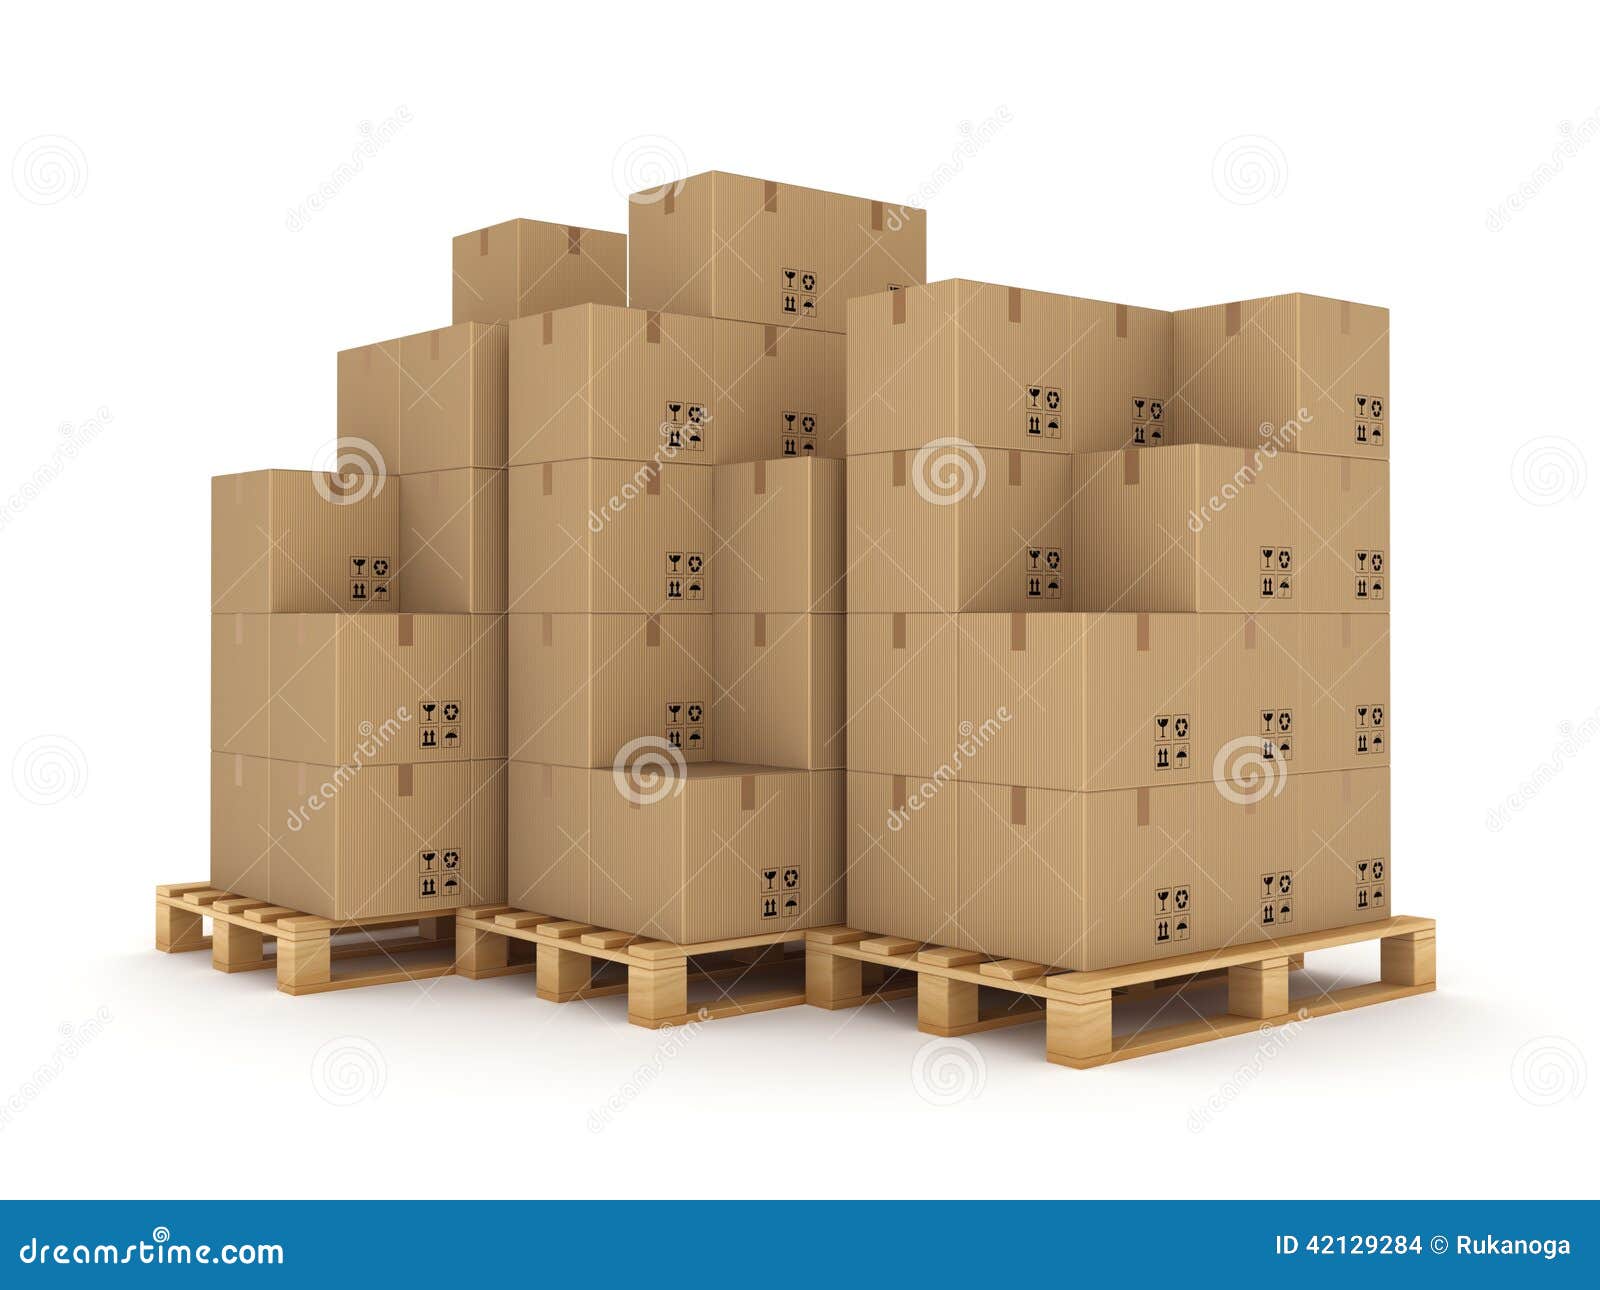 Сколько будет коробок на китайском. Укладка коробок на палете. Короб 40 30 25 на паллете. Коробки со шмелями на палете. Сцепки на паллетах.